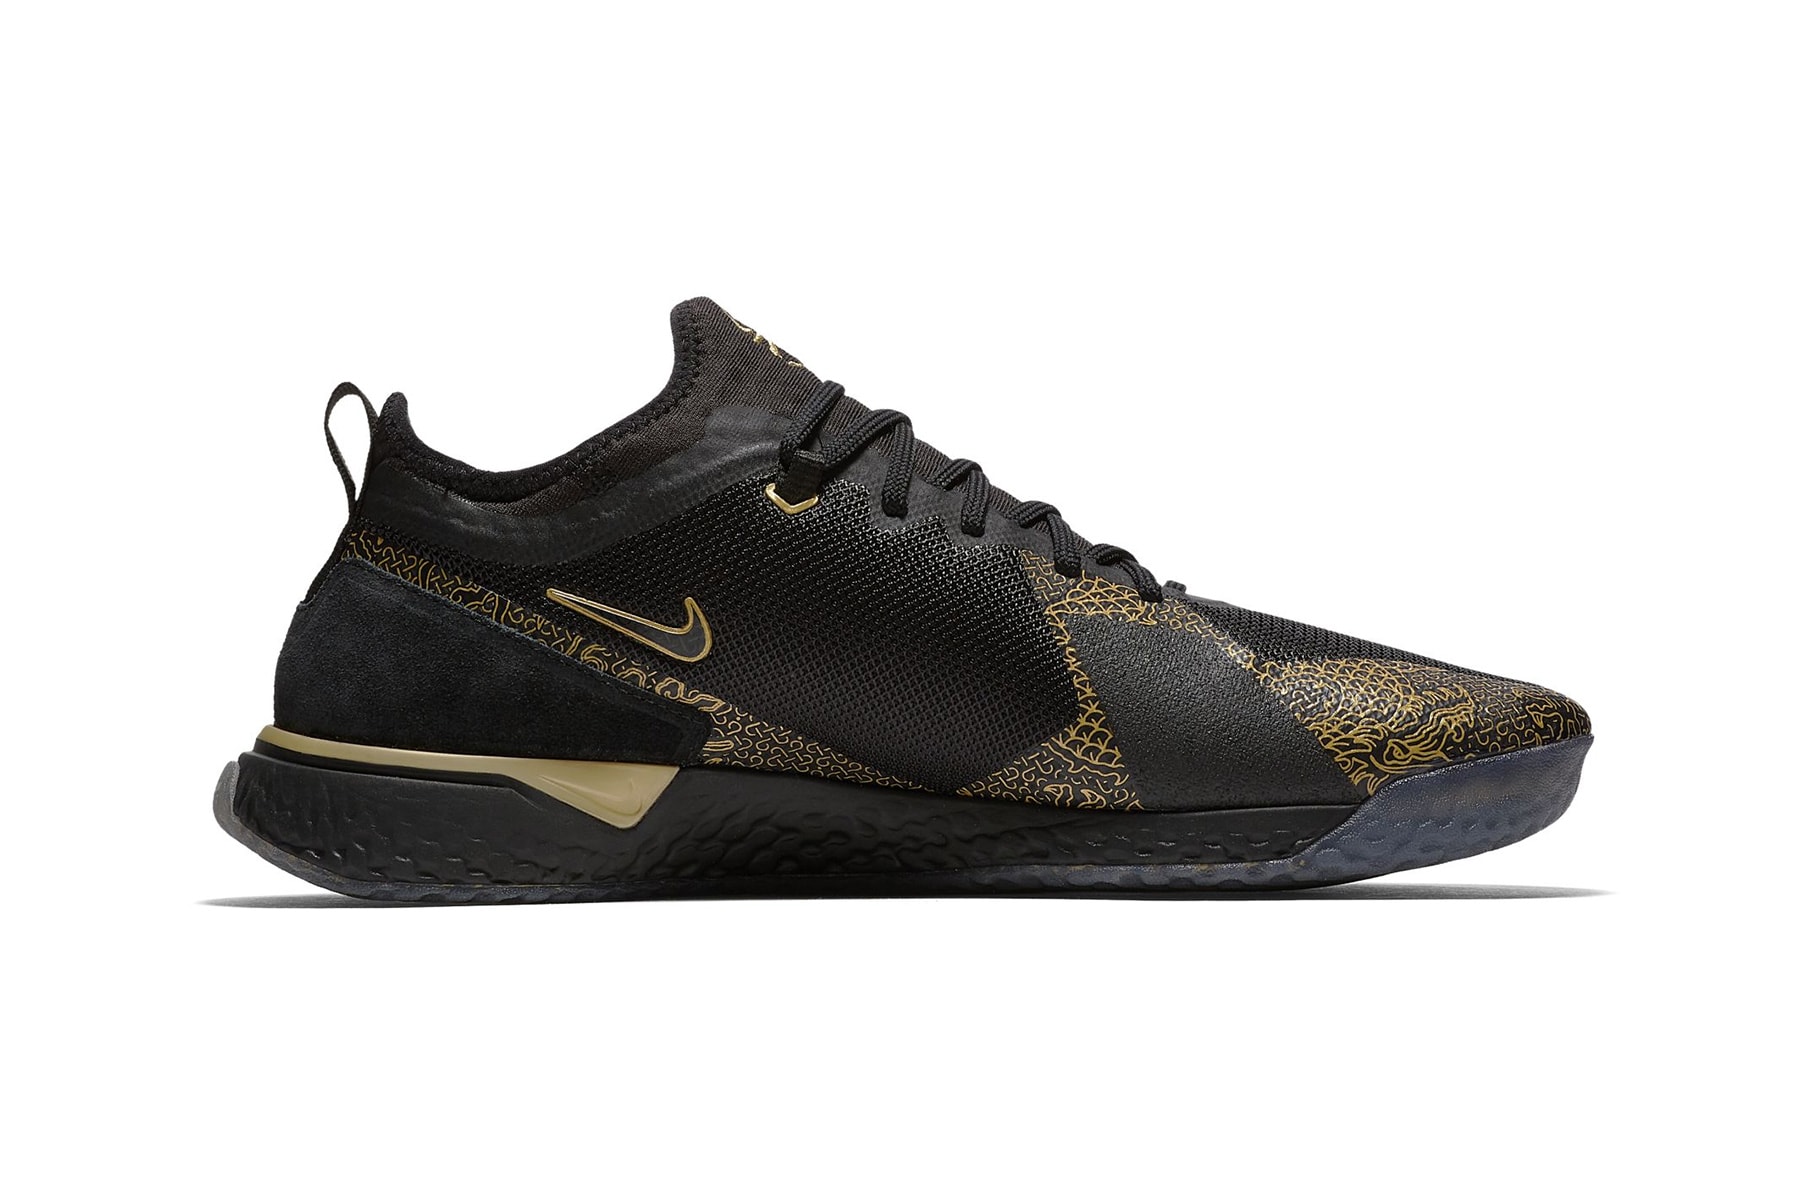 Cristiano Ronaldo Nike FC CR7 "Black/Metallic Gold" sneaker release date price